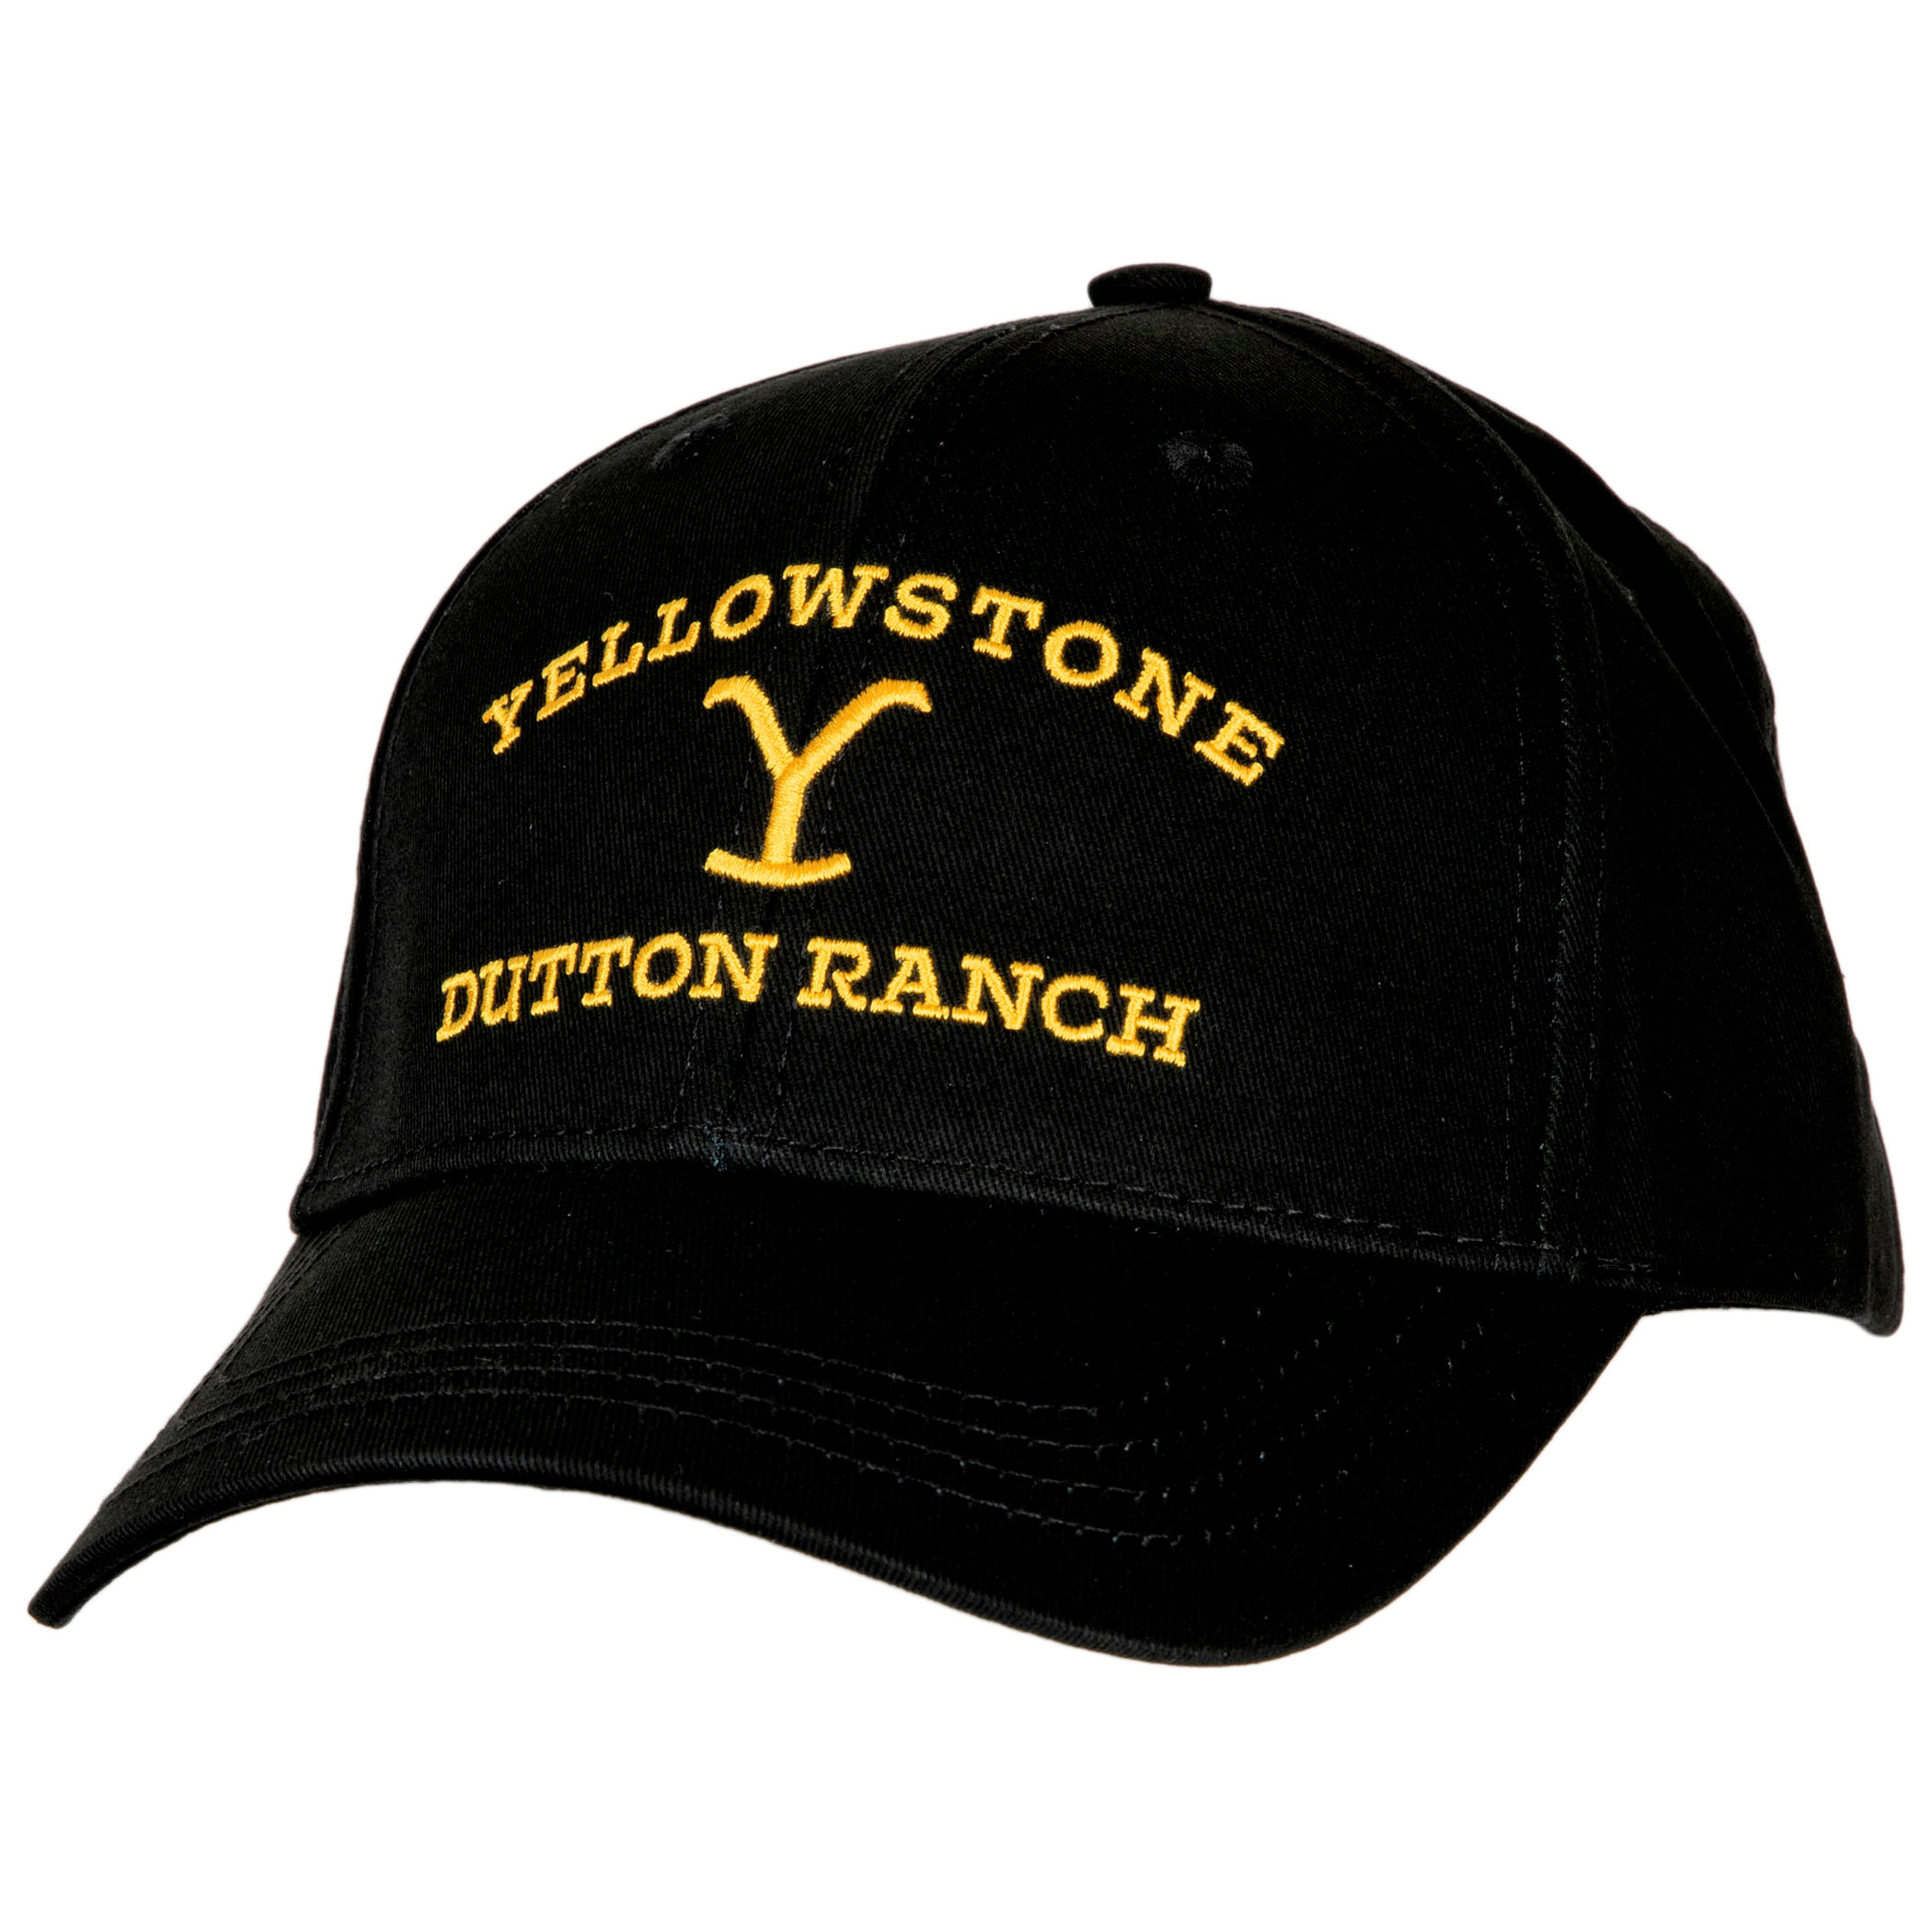 Yellowstone Dutton Ranch Logo Adjustable Baseball Cap